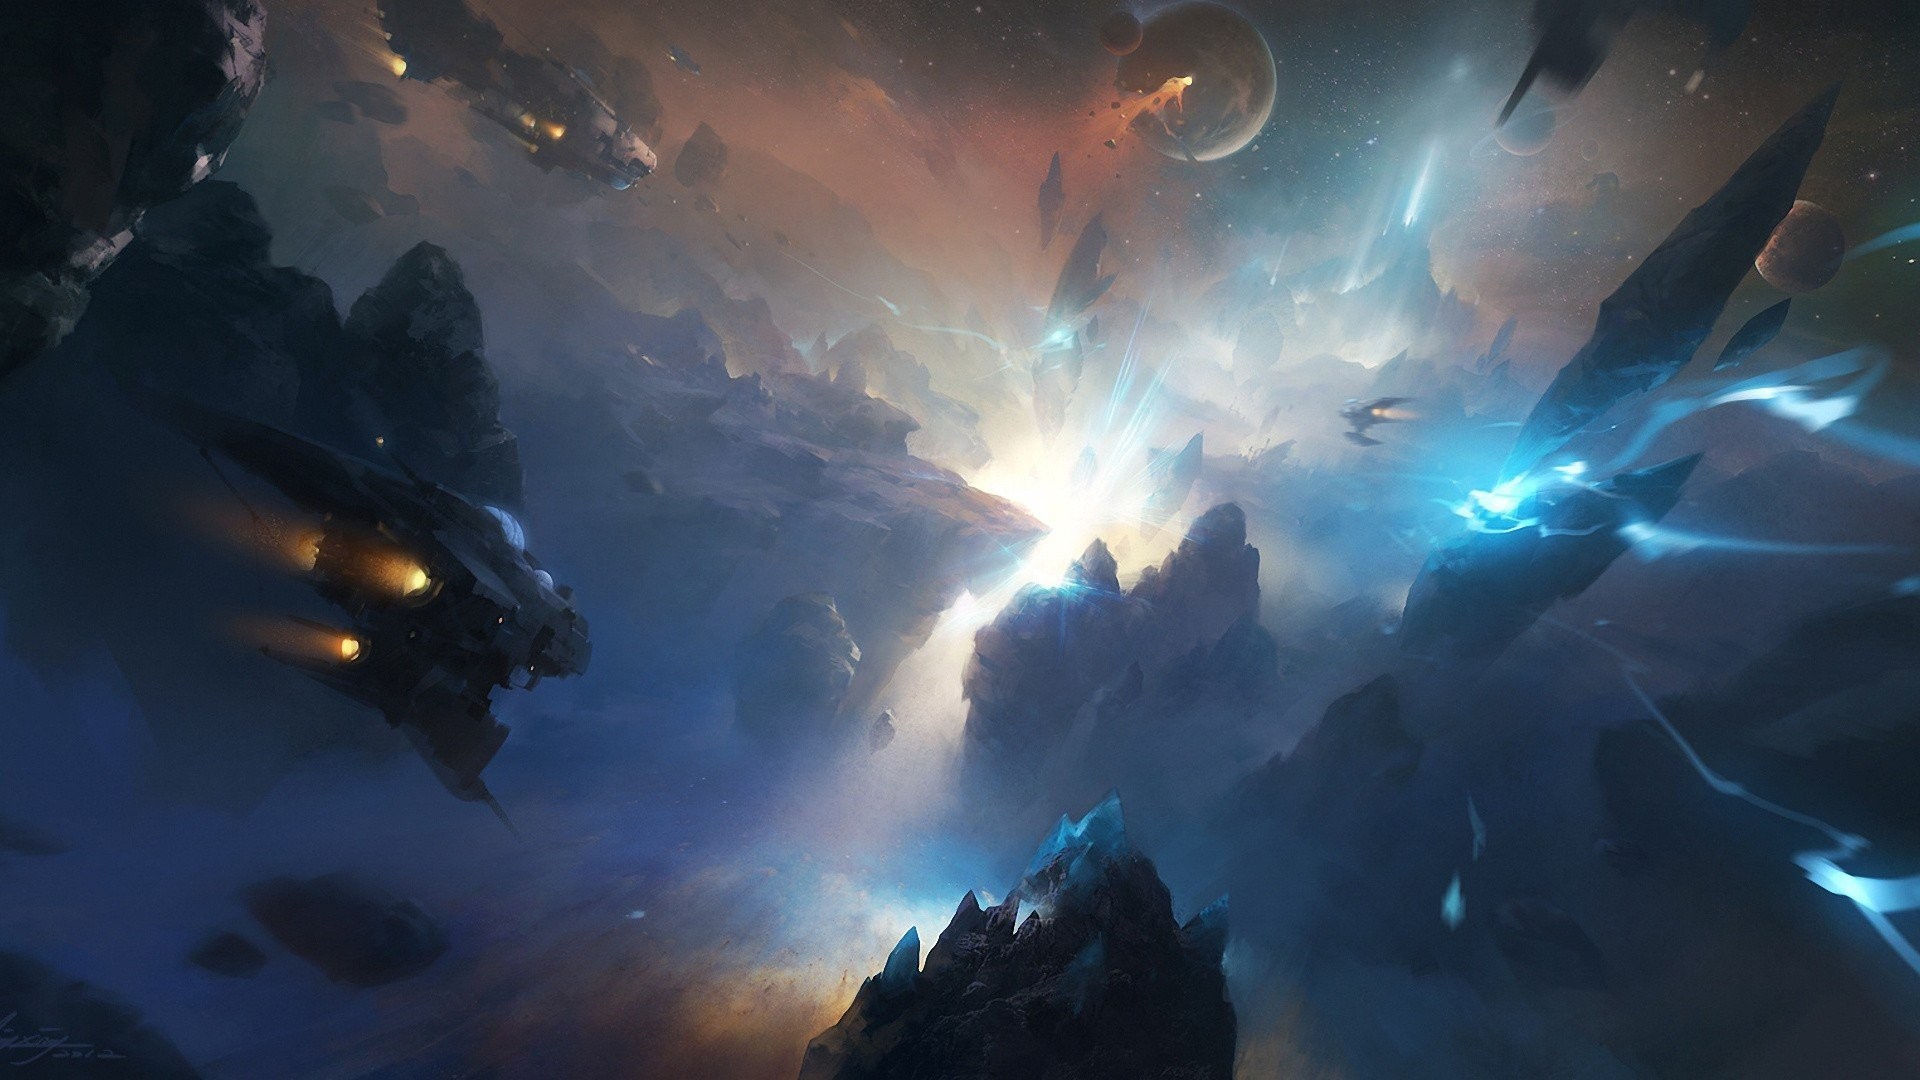 Spaceships Science Fiction Artwork Fantasy Art Futuristic Space Digital